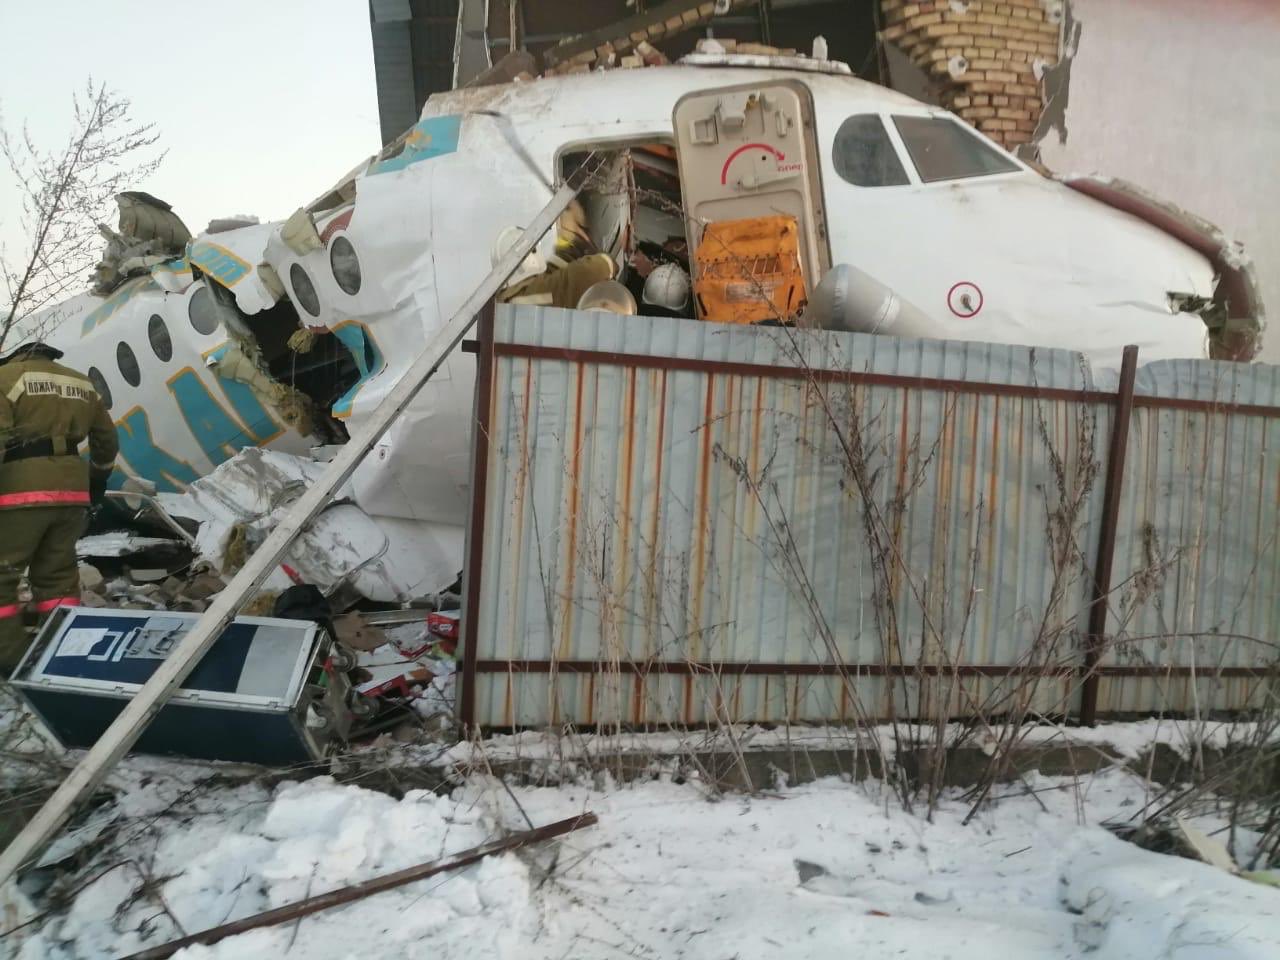 Bek Air Plane Carrying 101 Passenger Crashes After Take-Off In Kazakhstan